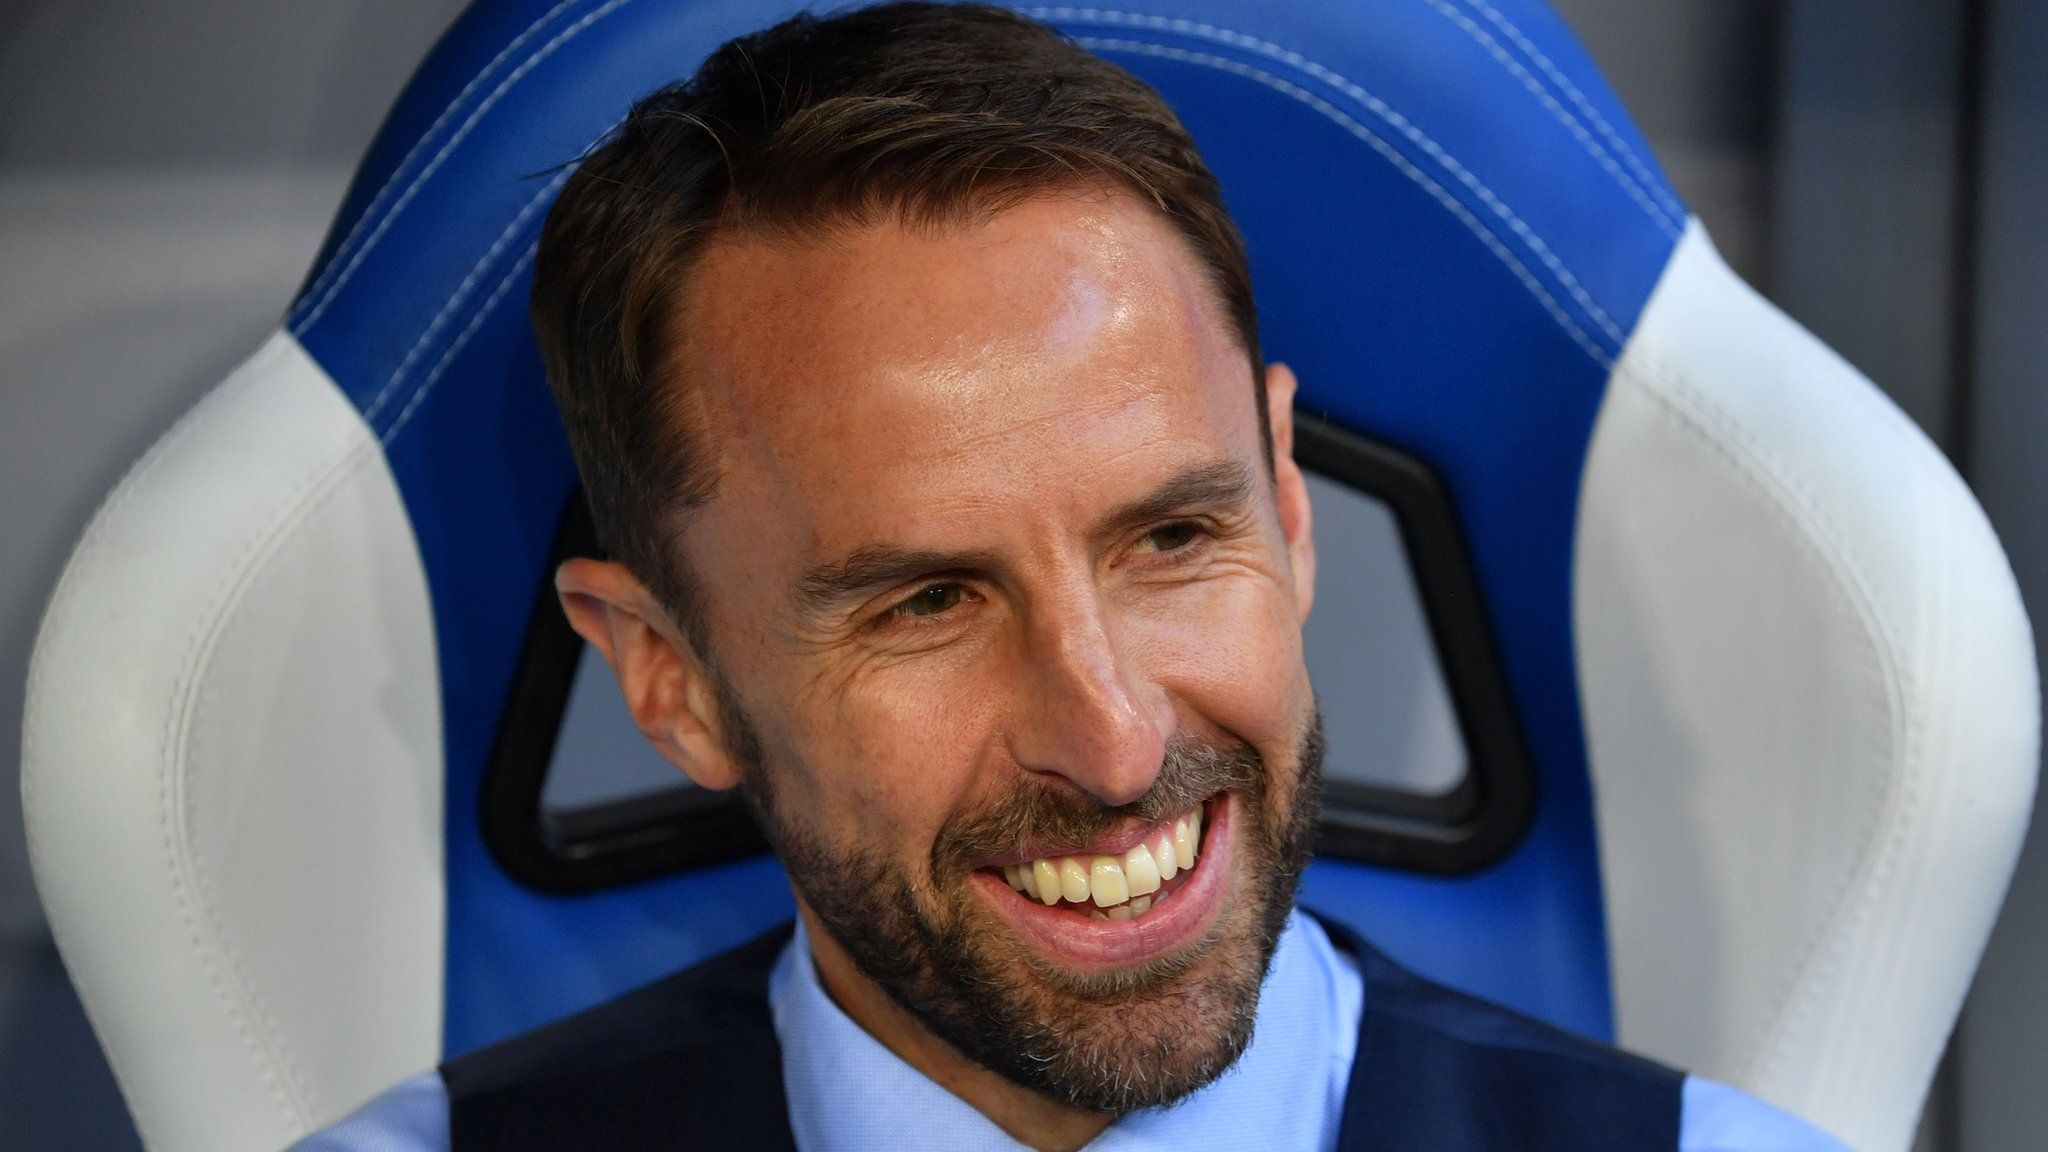 England boss Gareth Southgate smiles